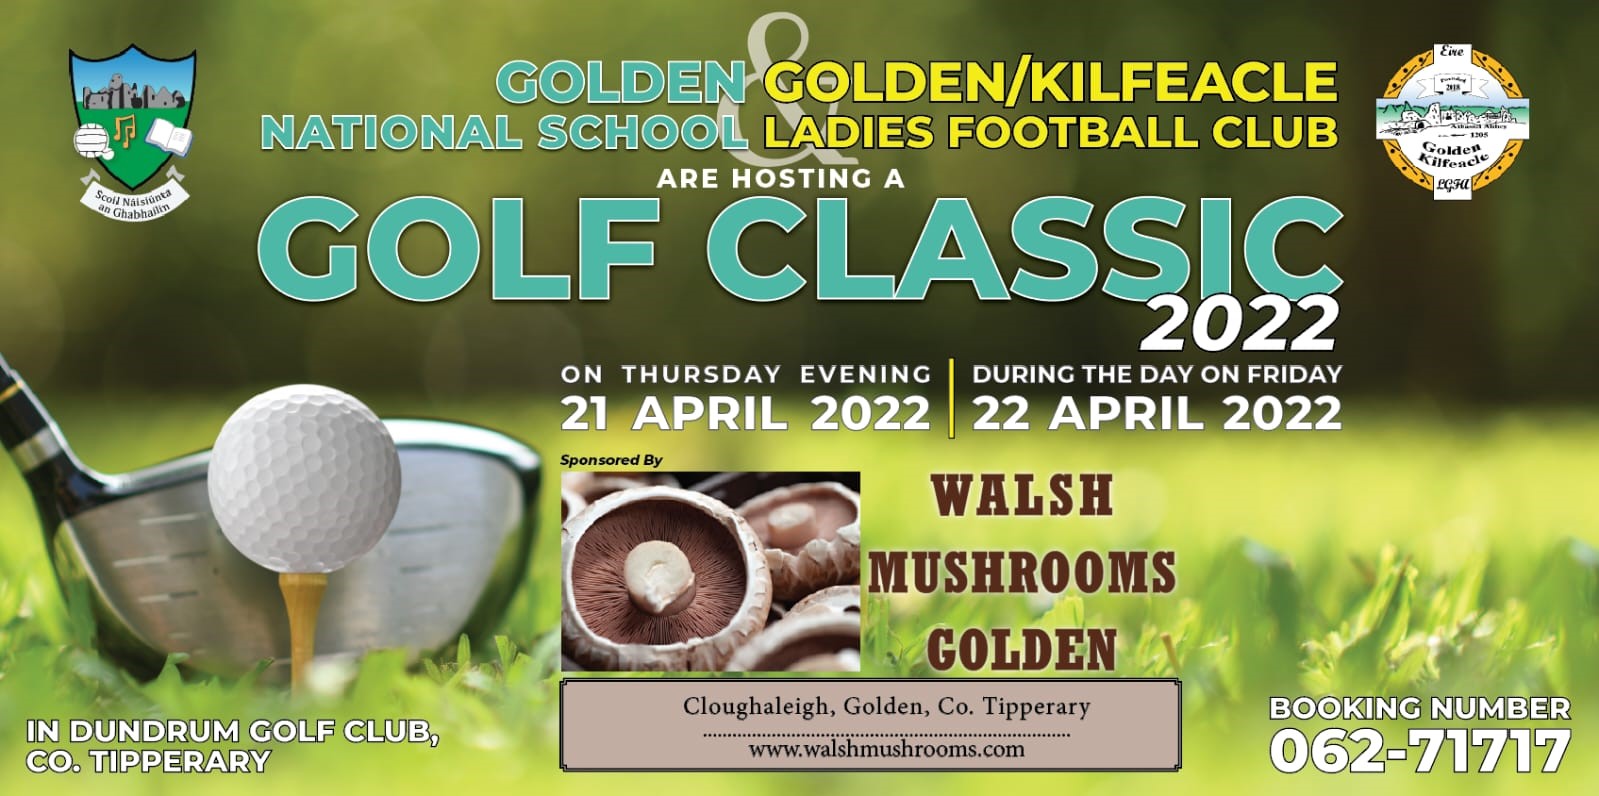 Walsh sponsors local Golf Classic